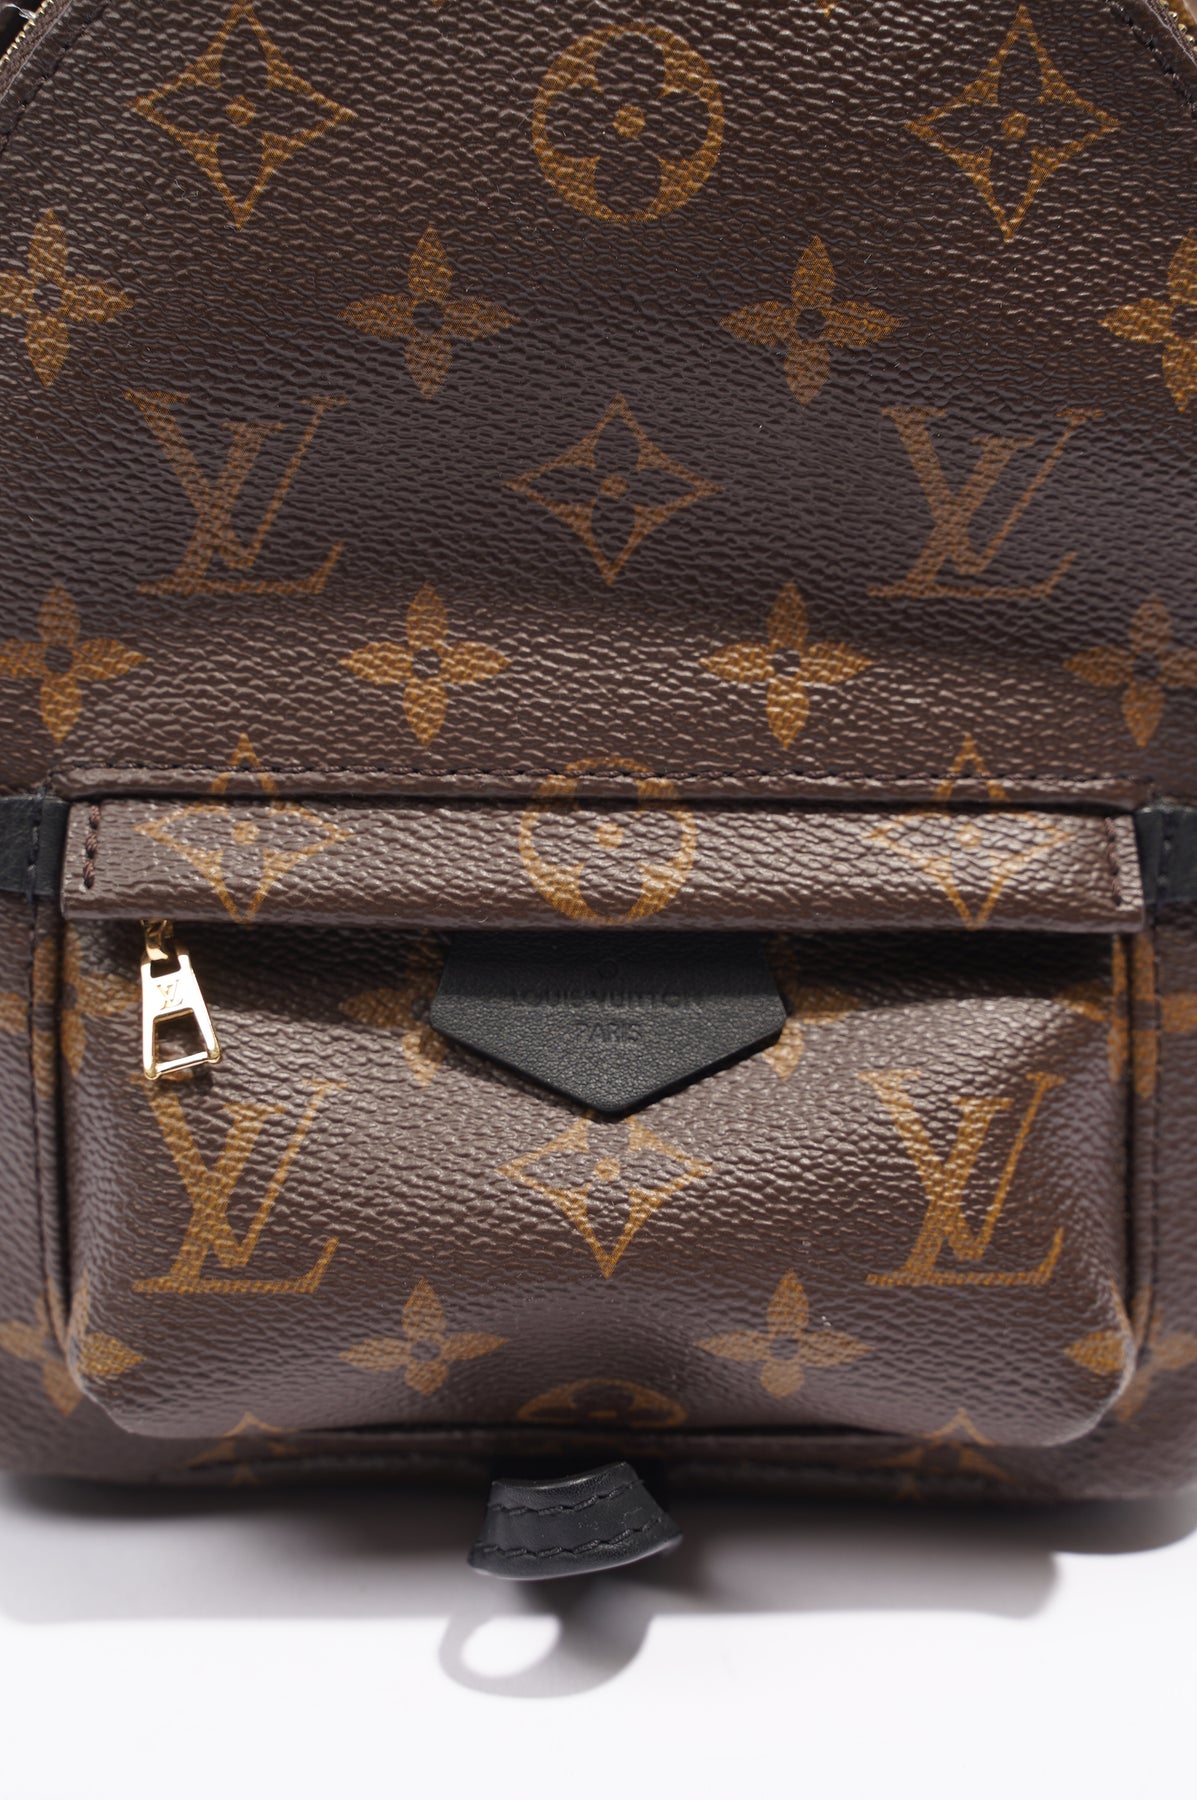 Louis Vuitton Mini Leather Monogram Backpack